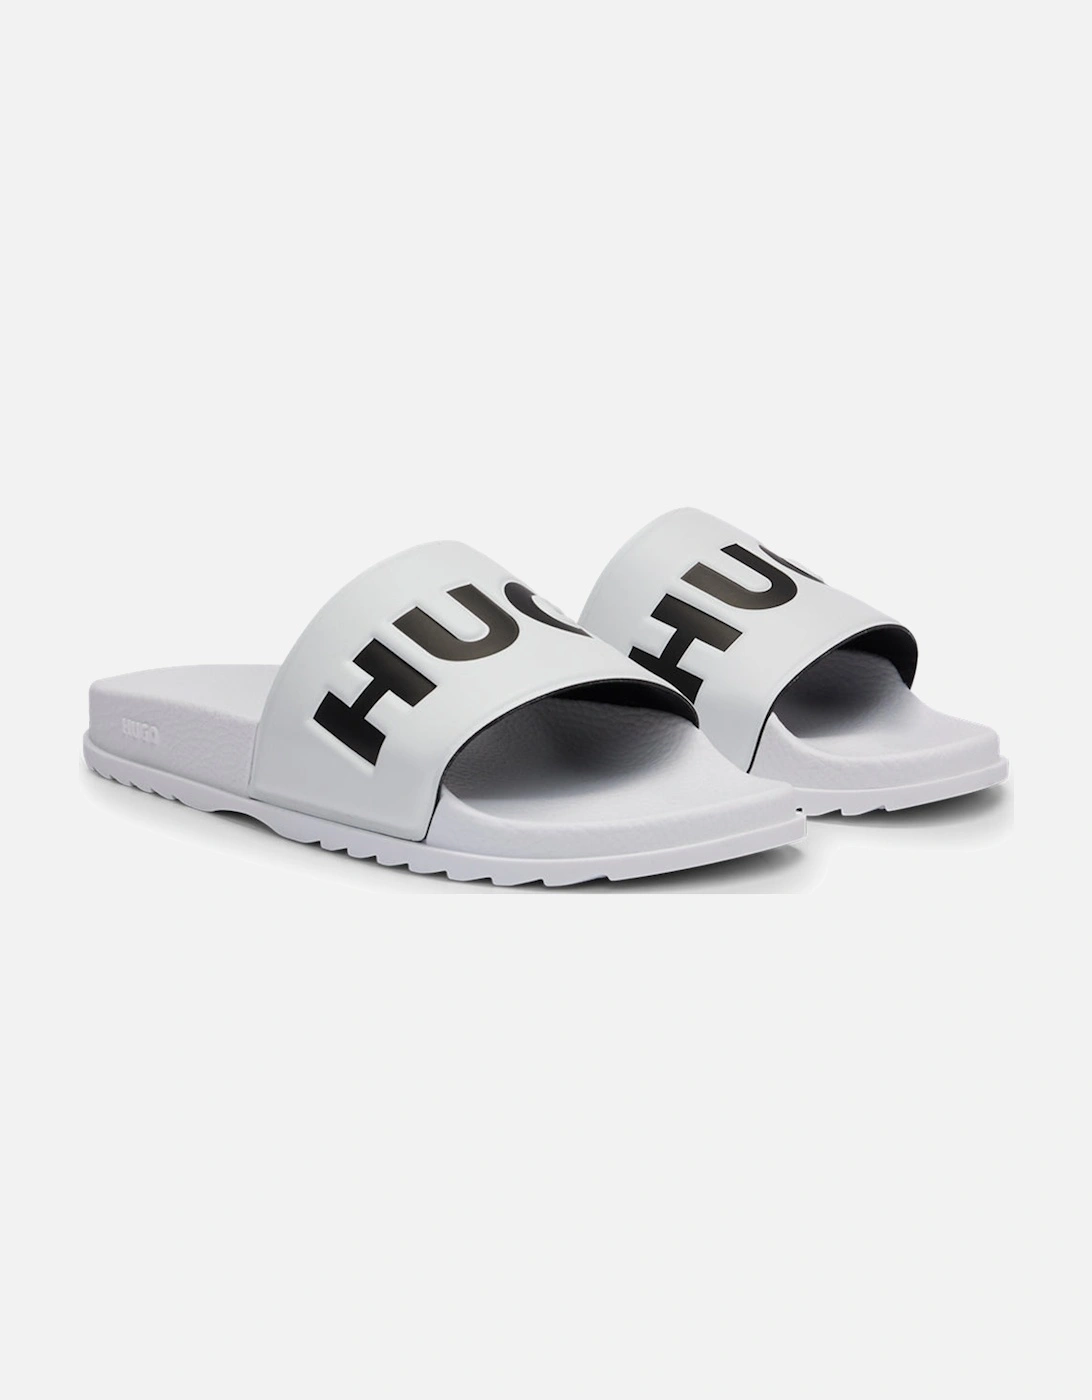 Match Slider Sandals, White, 11 of 10